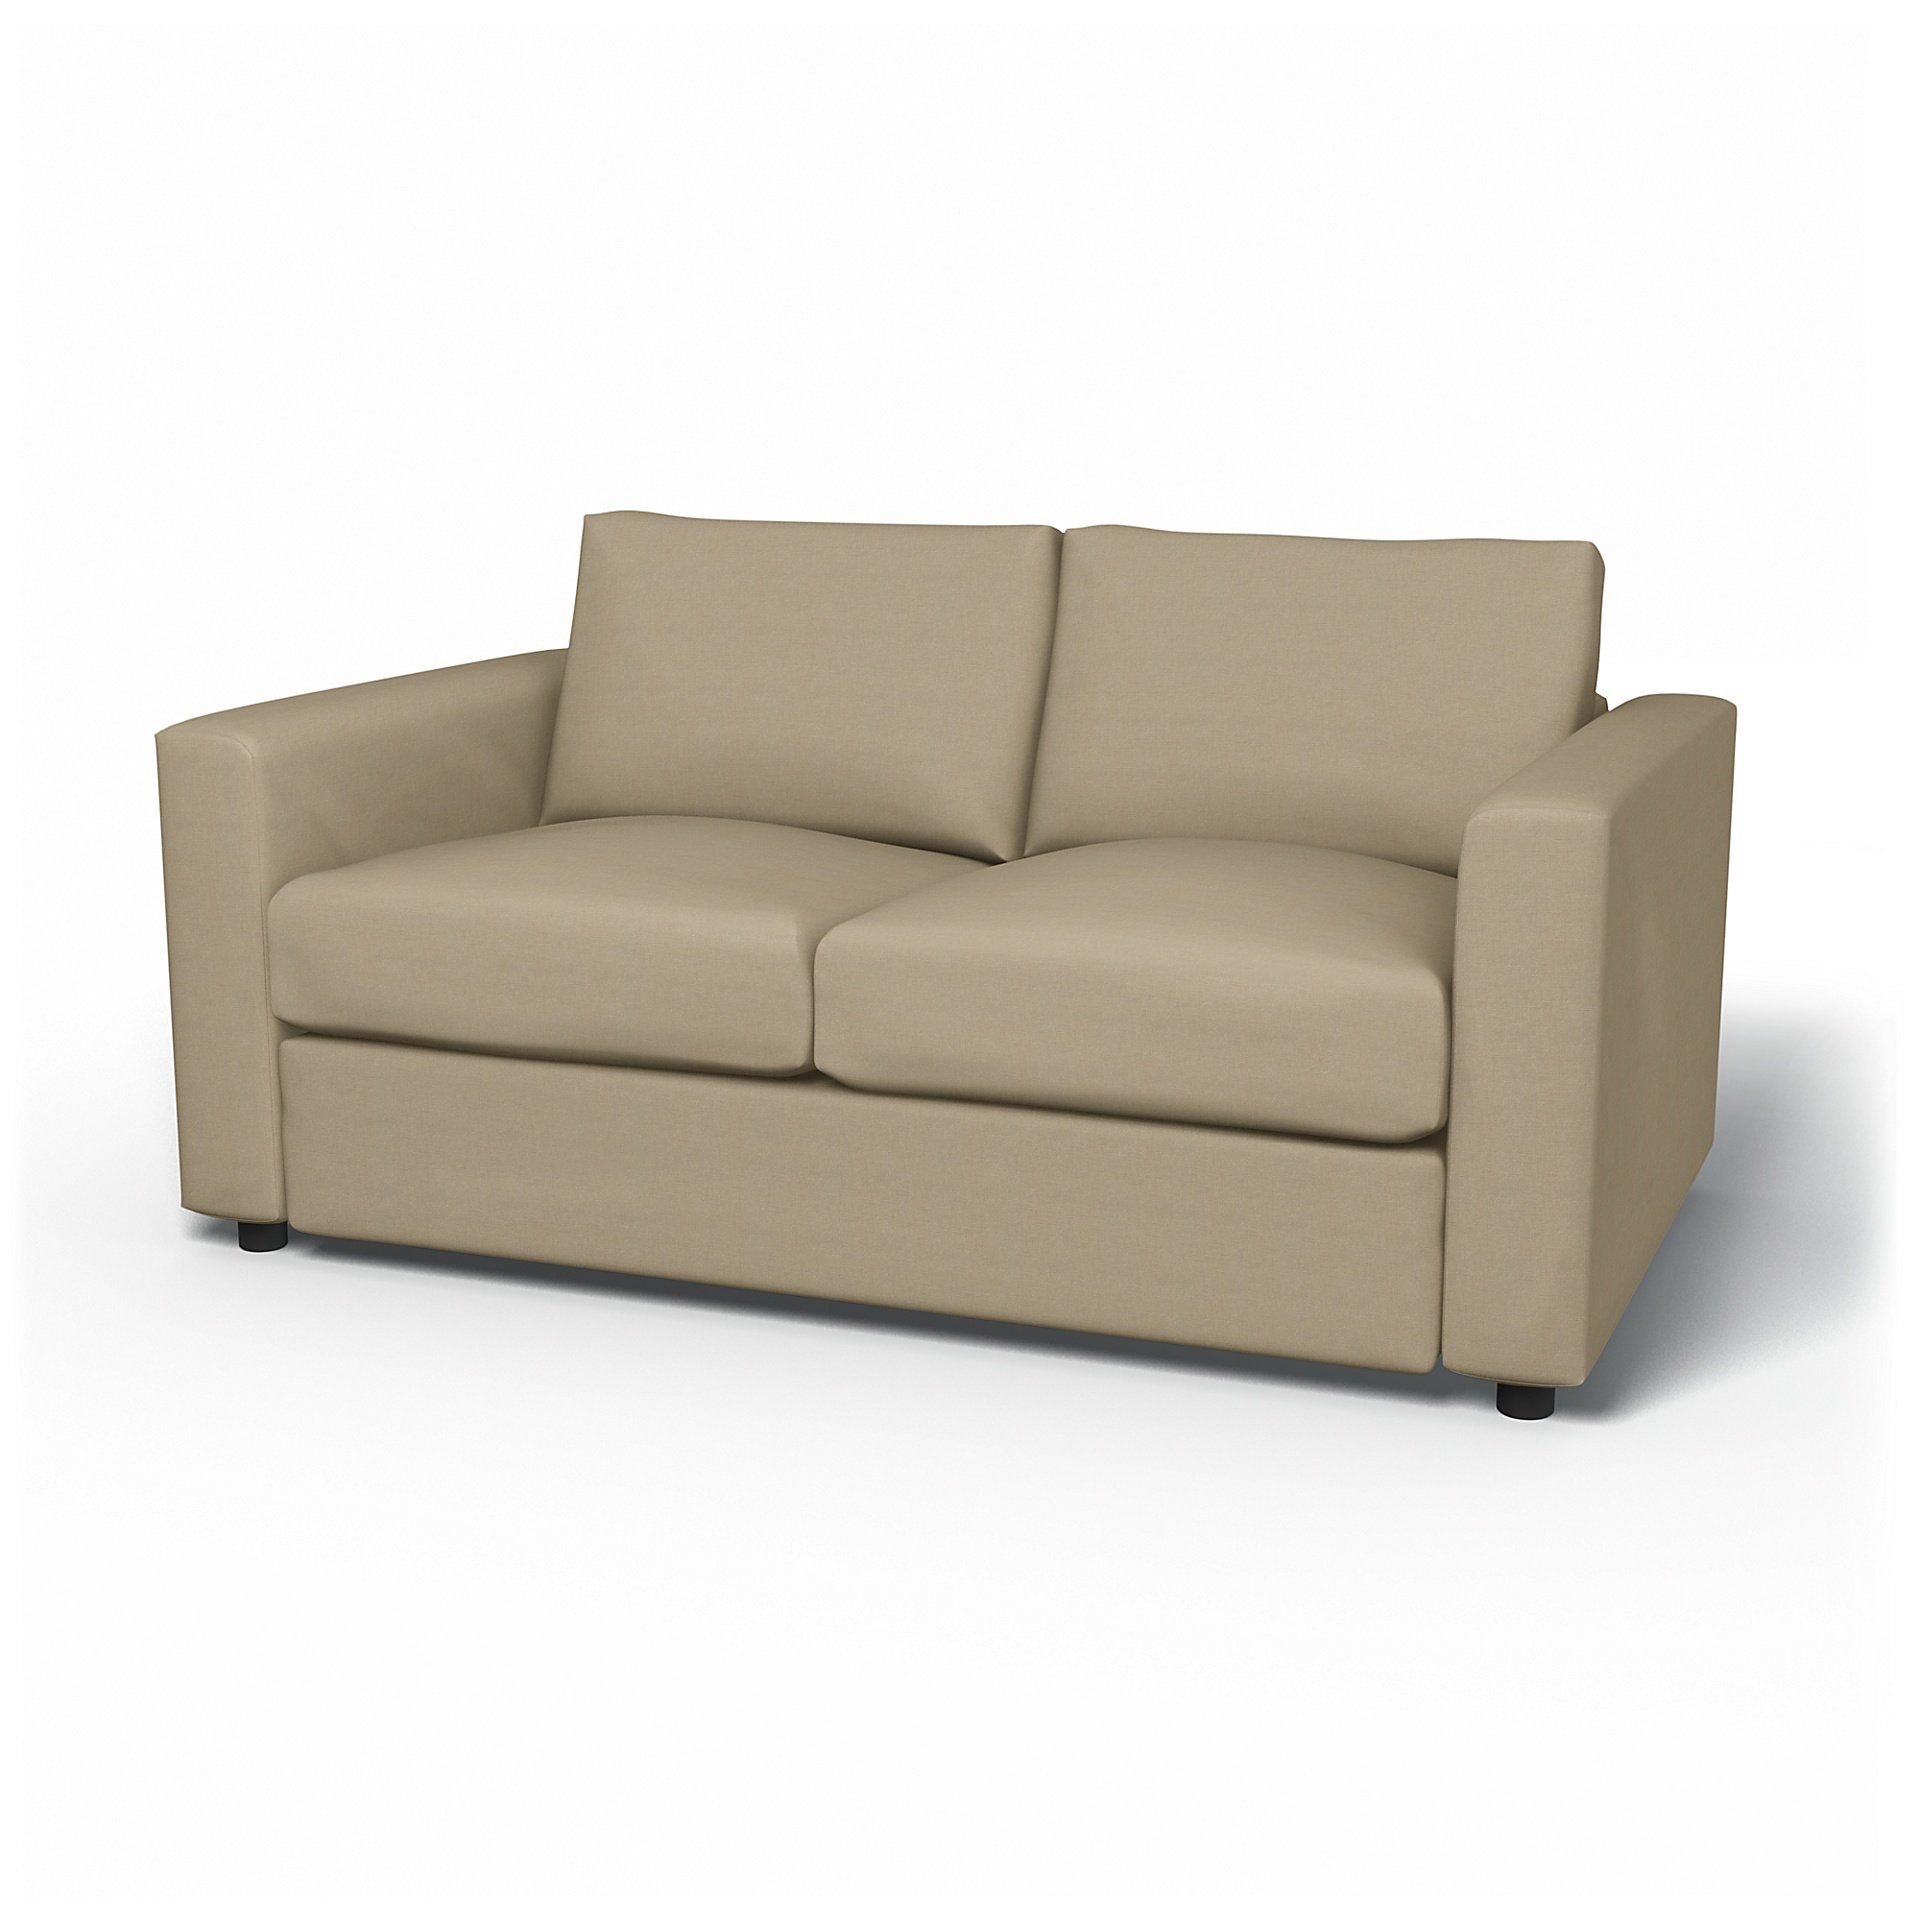 IKEA - Vimle 2 Seater Sofa Cover, Tan, Linen - Bemz